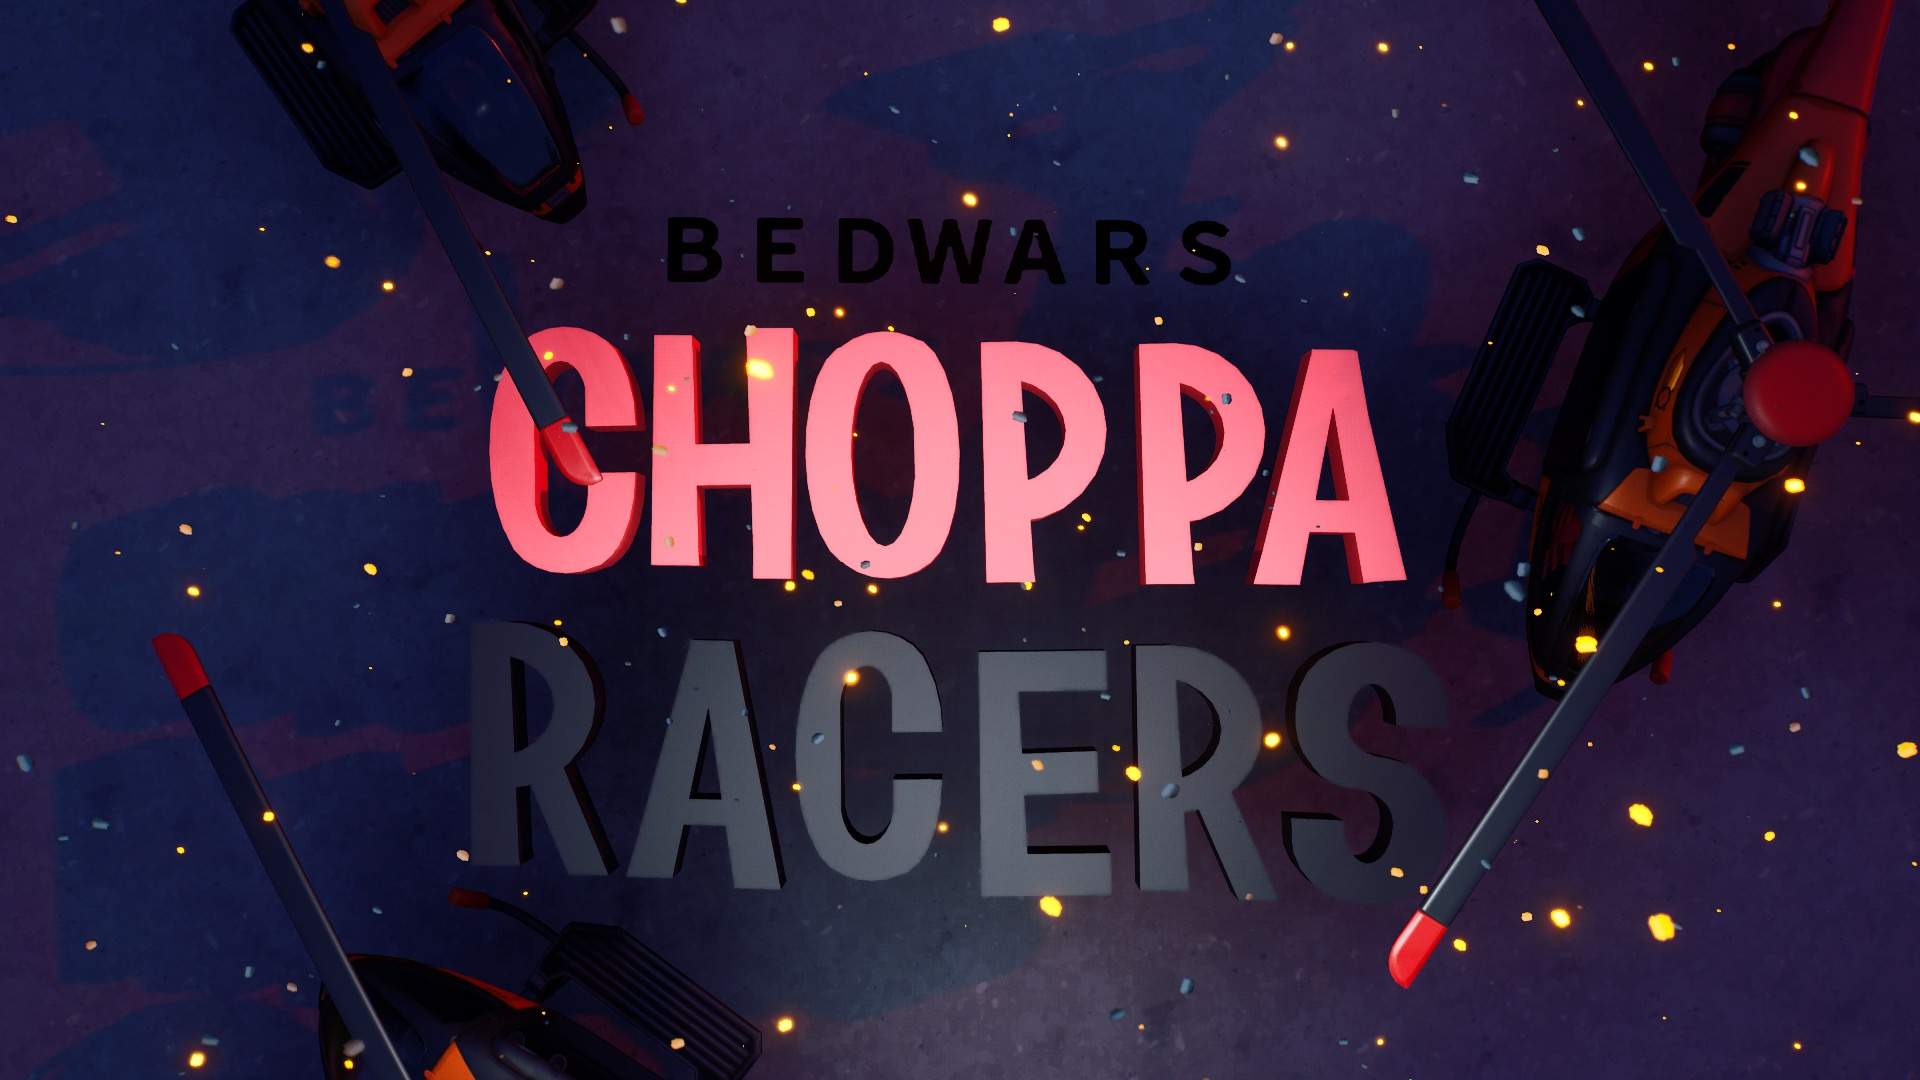 BEDWARS - CHOPPA RACERS (TUTORIAL)